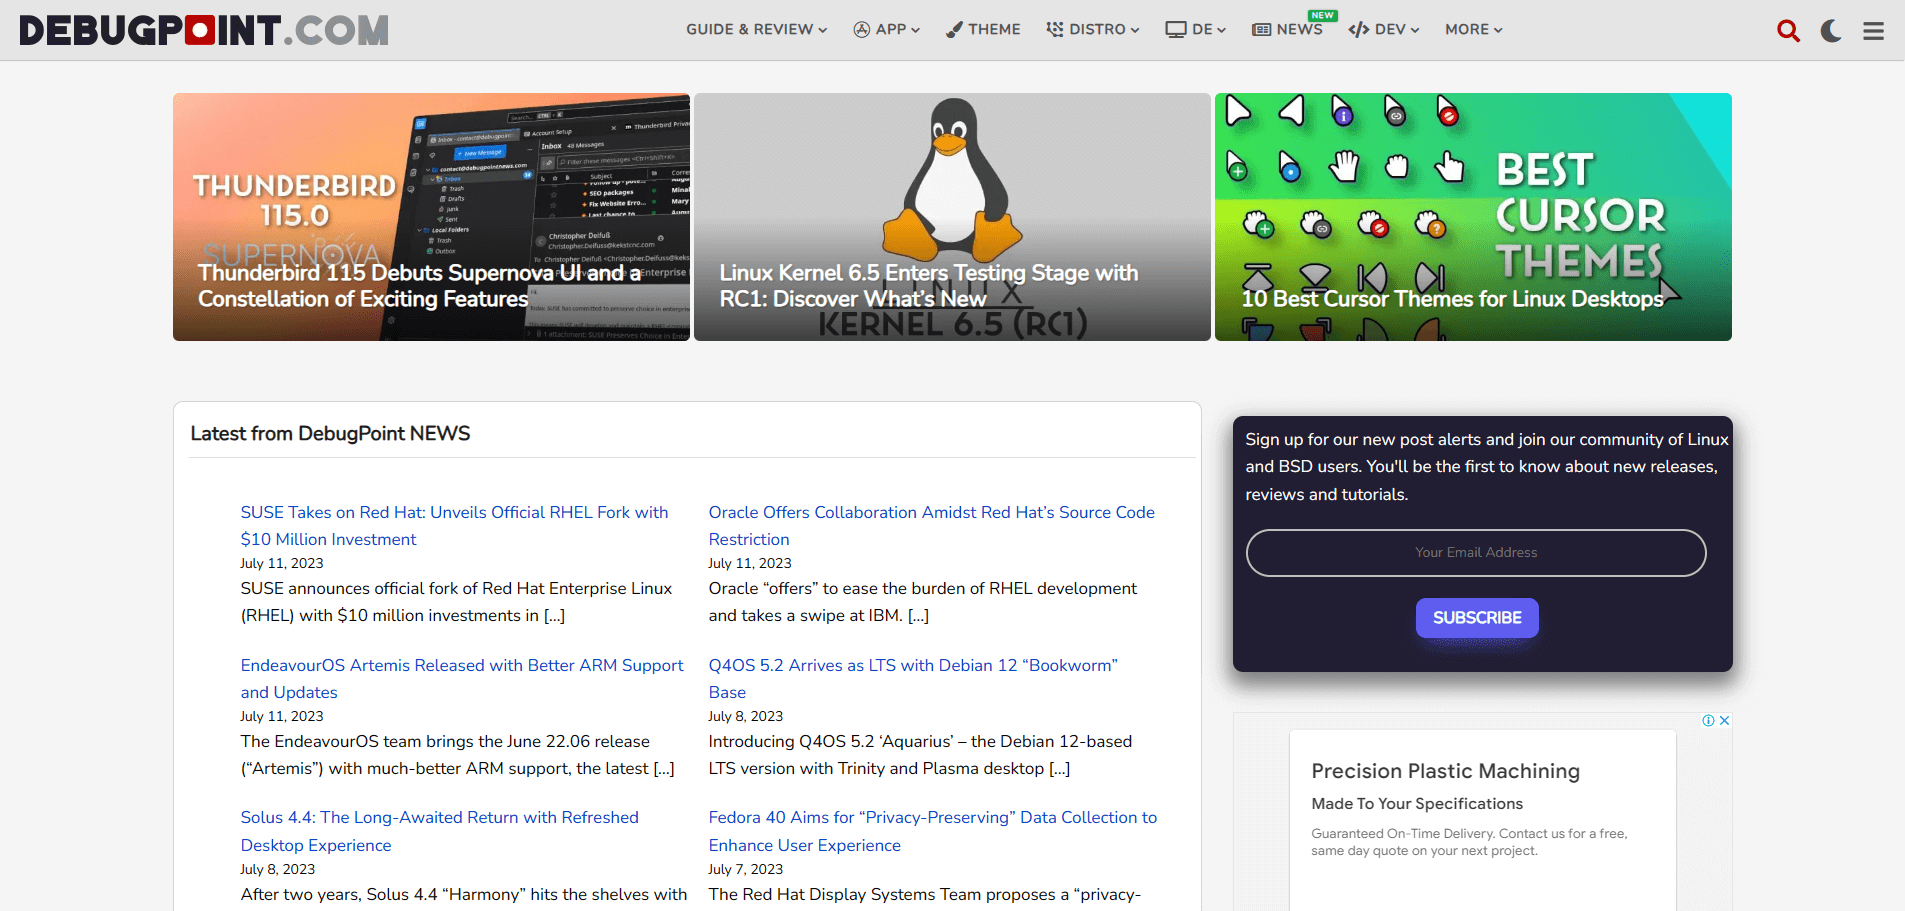 NoobsLab  Ubuntu/Linux News, Reviews, Tutorials, Apps